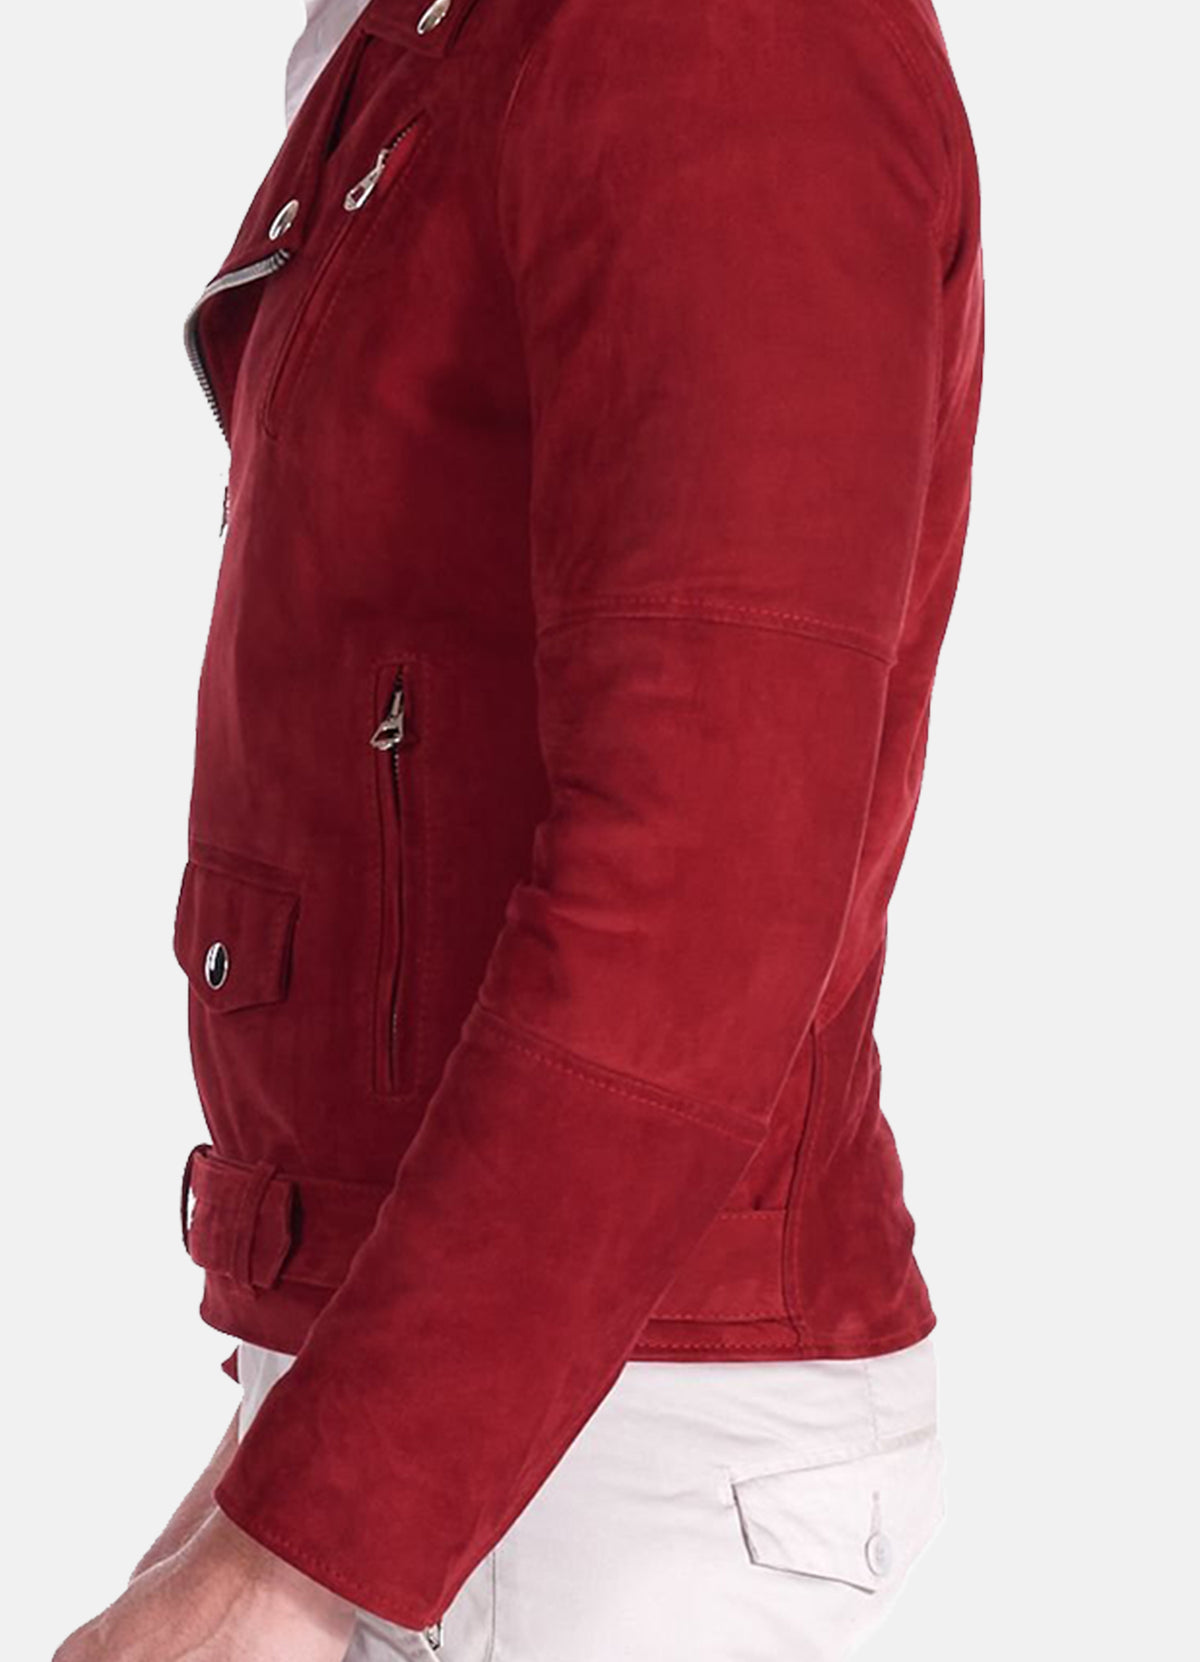 Mens Burgendy Red Suede Leather Jacket | Elite Jacket